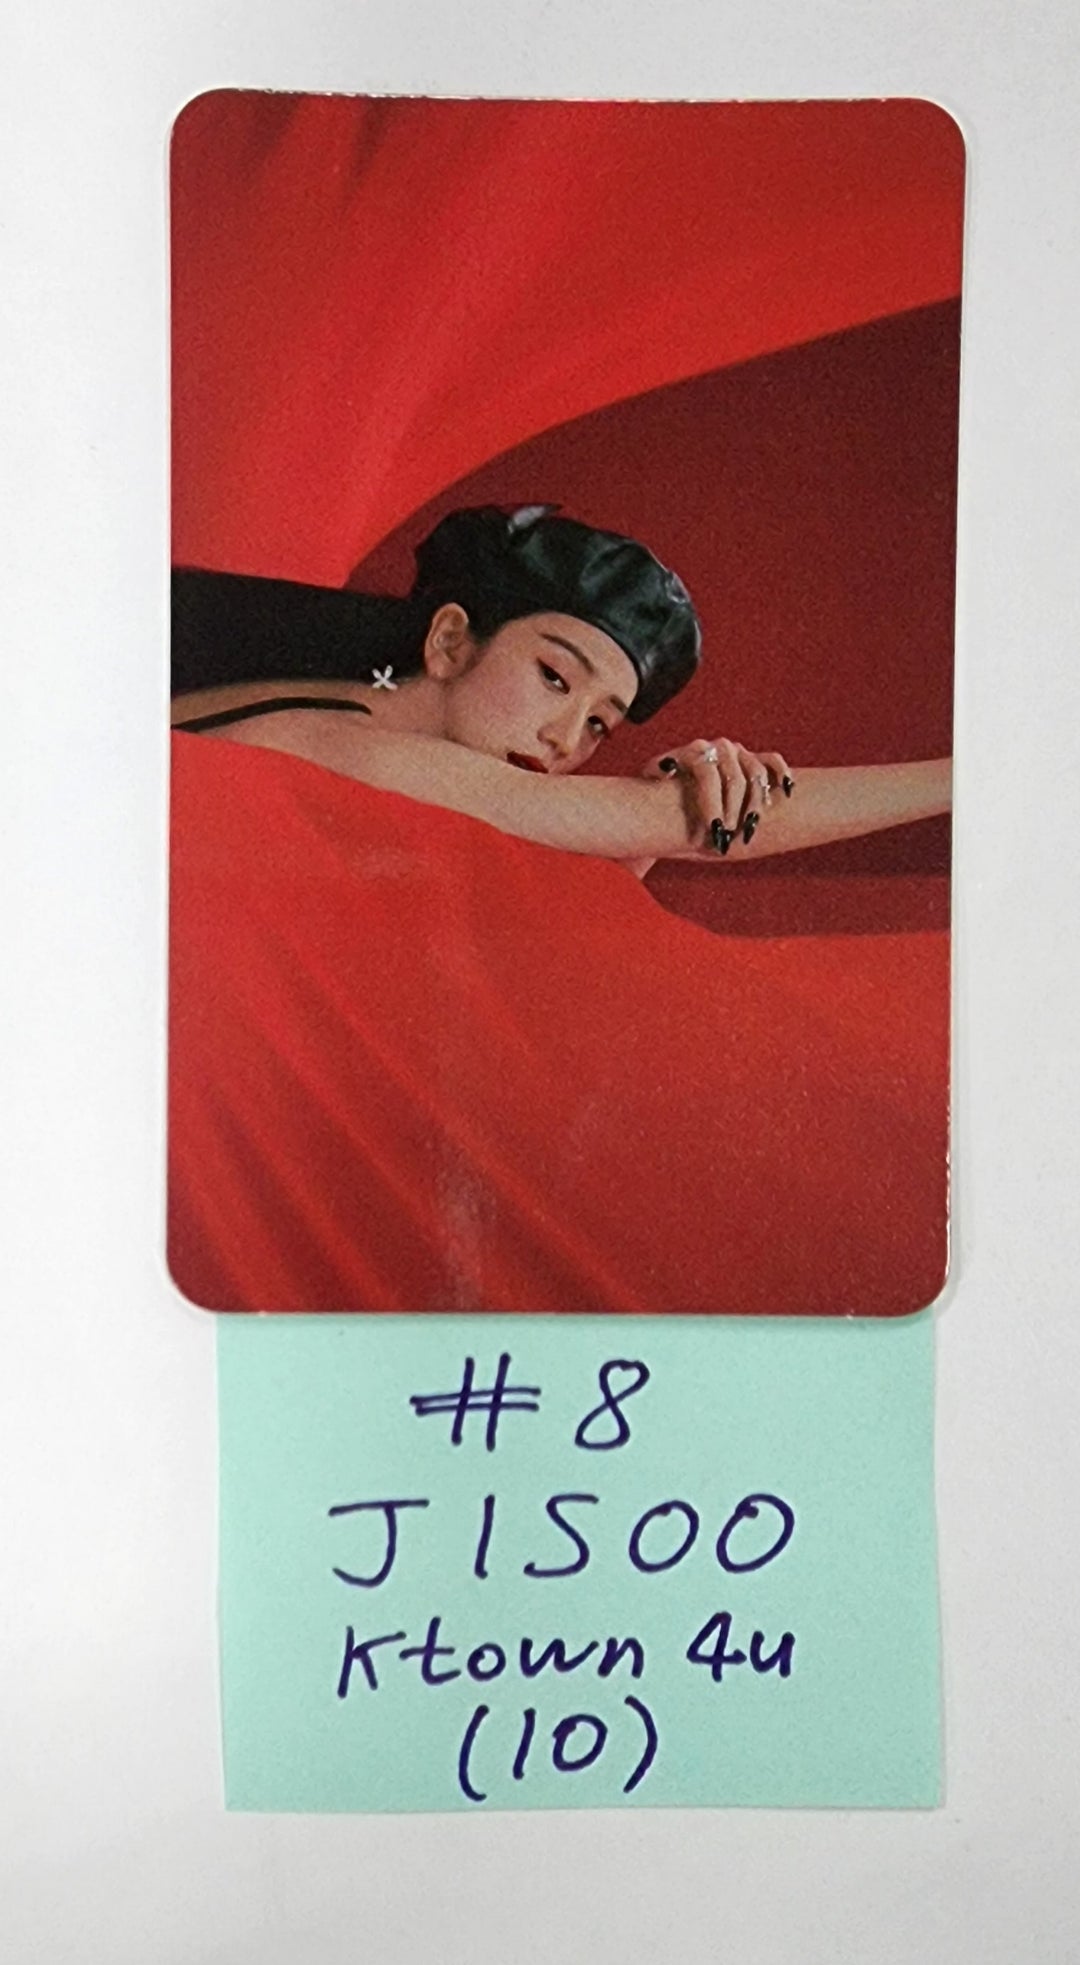 JISOO (Of Black Pink) "ME" 1st Single Album - Ktown4U プレオーダー特典&amp;ファンサイン会フォトカード